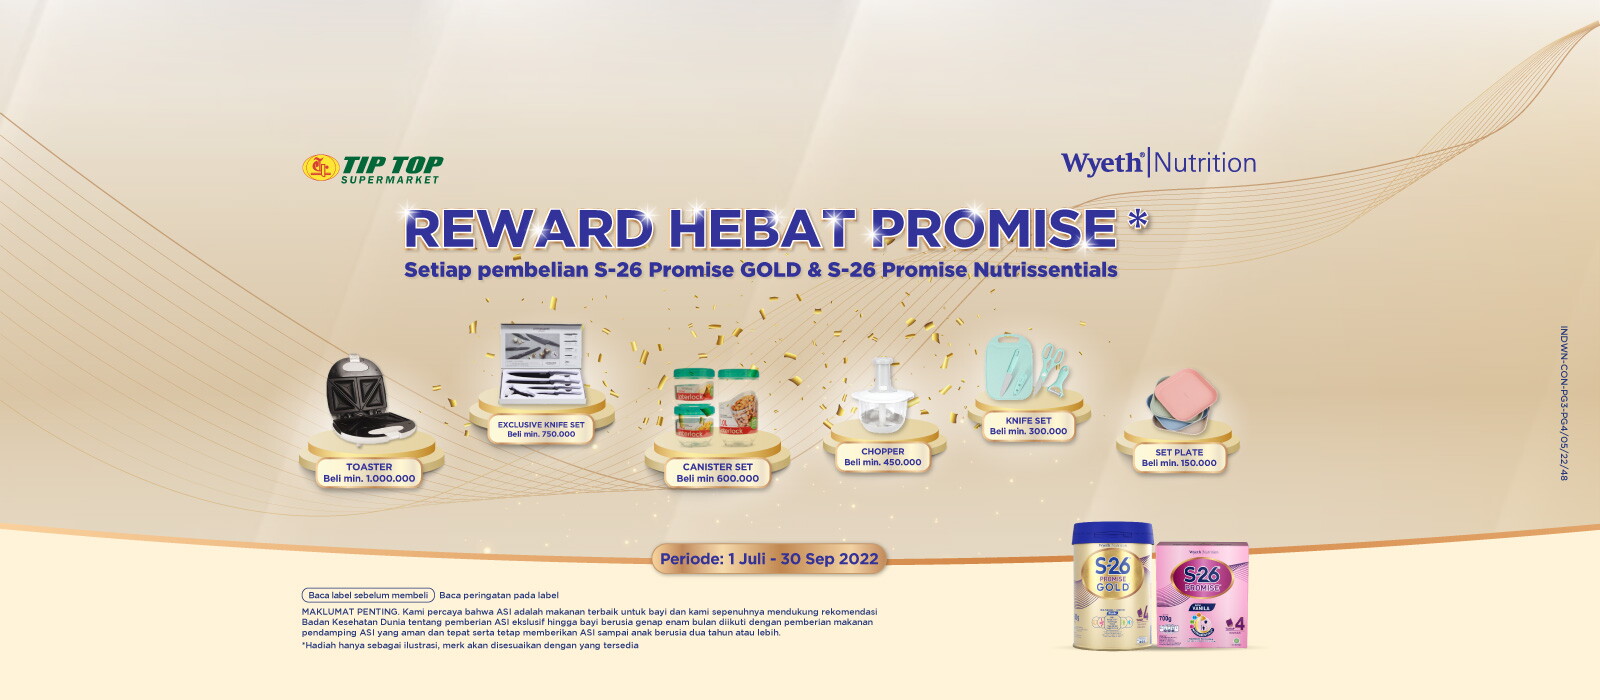 Reward Hebat Promise Tip Top Juli - September 2022